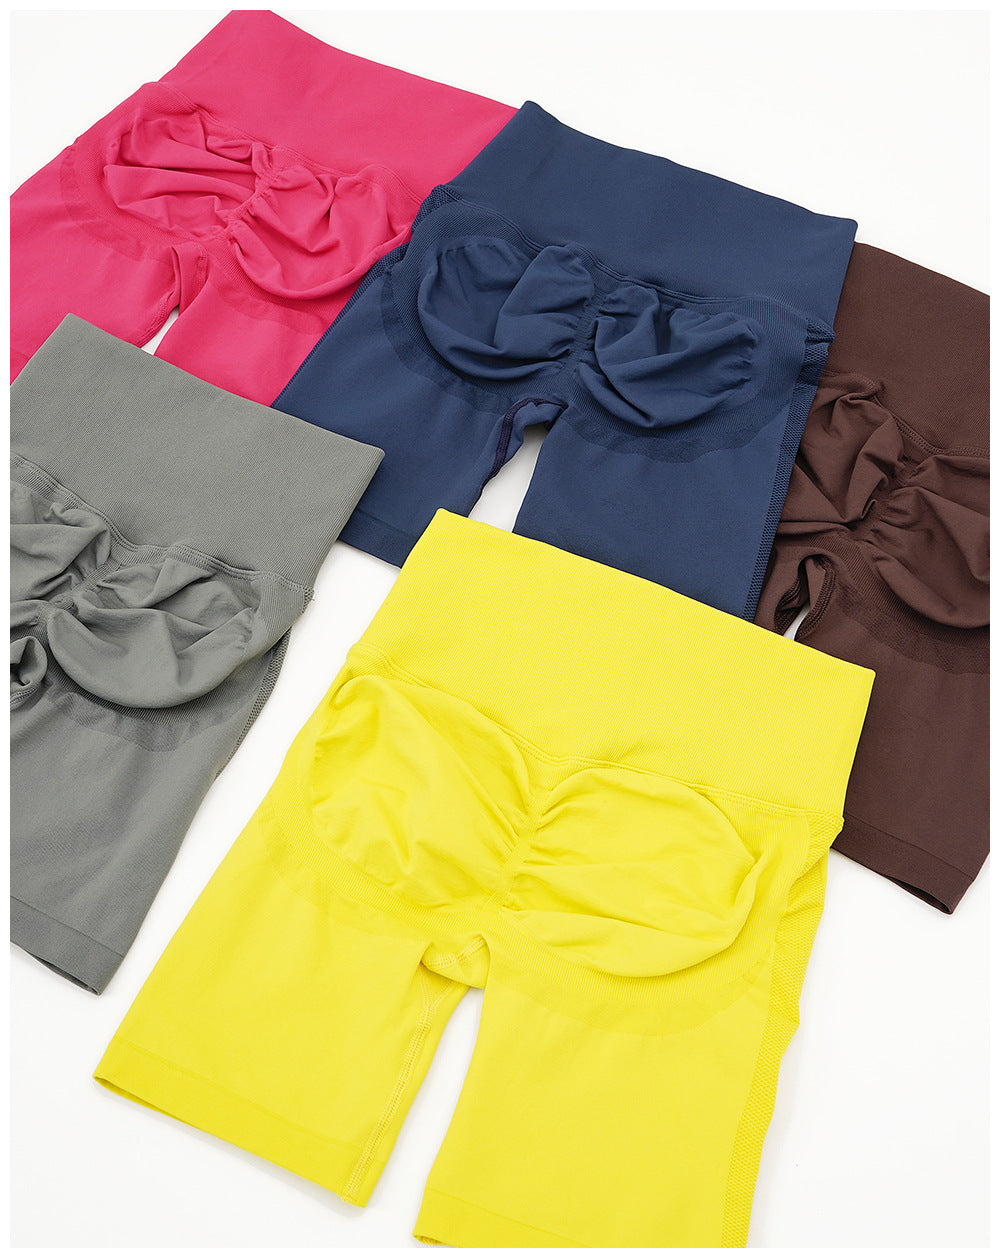 Sexy Women High Waist Tight Yoga Pants-Pants-Yellow-S-Free Shipping Leatheretro